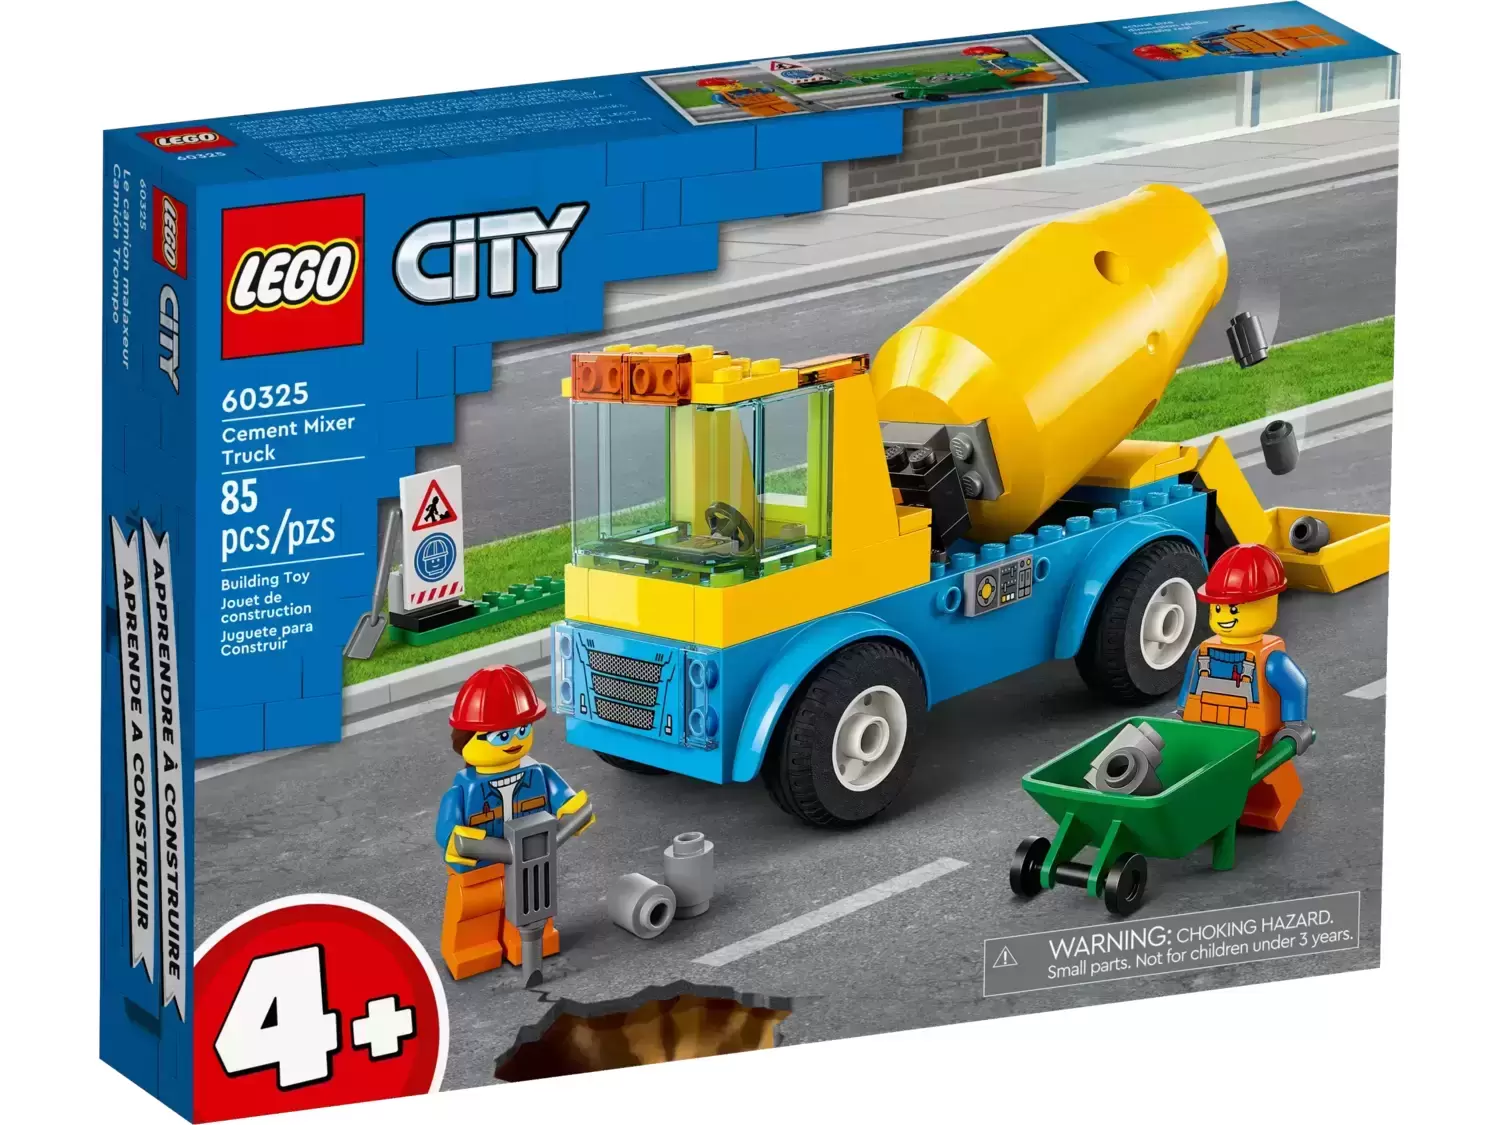 LEGO CITY - Cement mixer truck